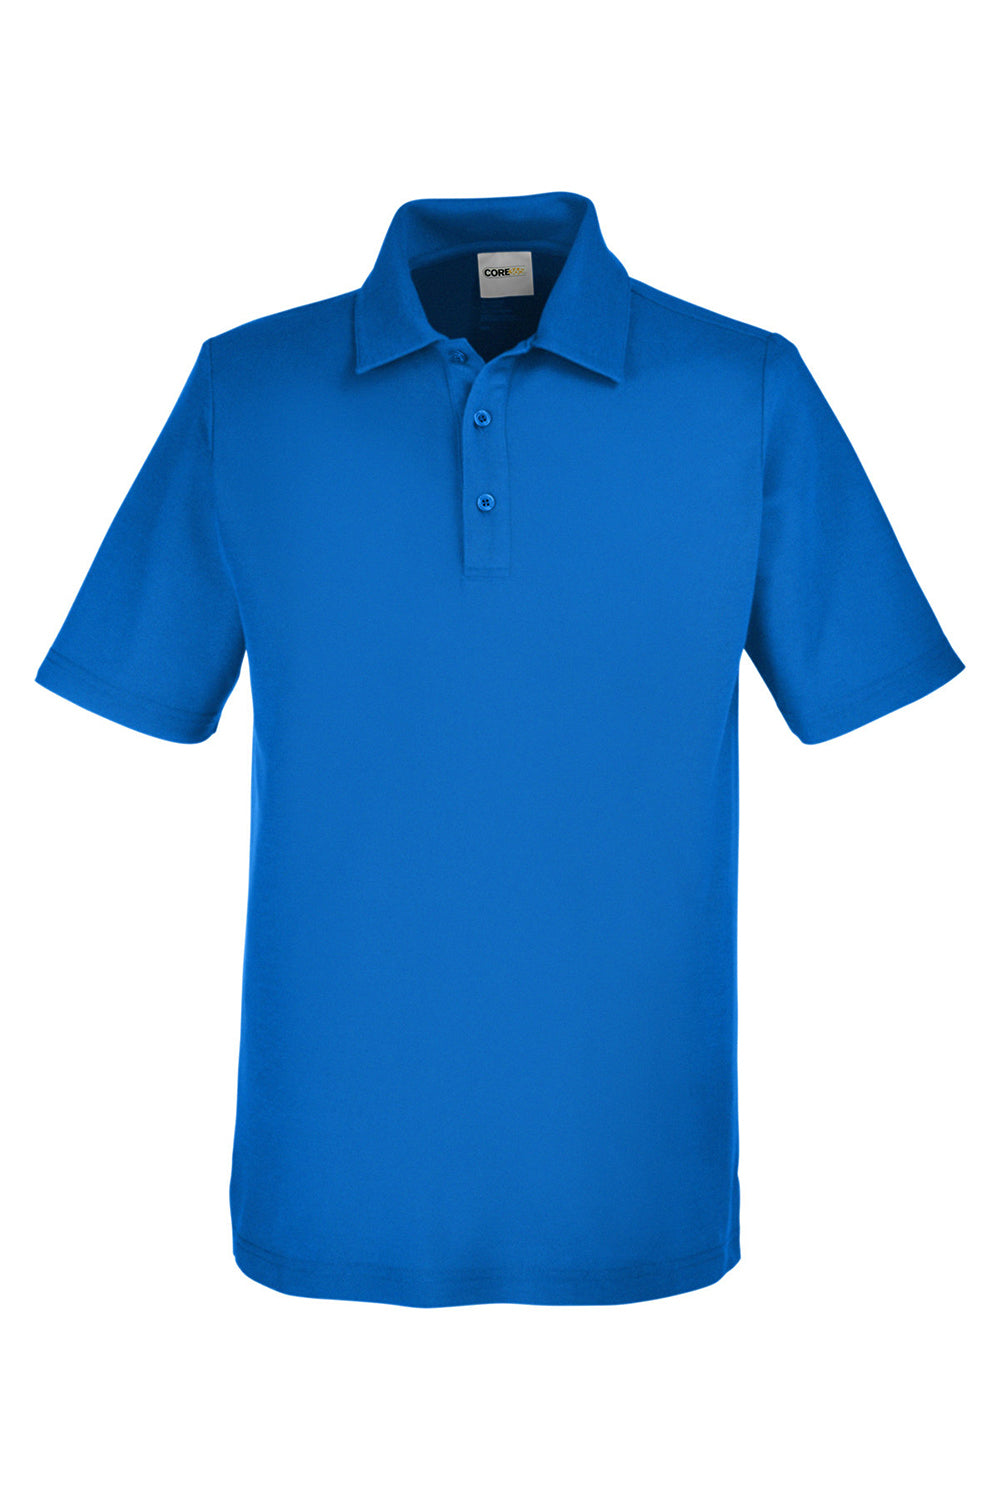 Core 365 CE112 Mens Fusion ChromaSoft Performance Moisture Wicking Short Sleeve Polo Shirt True Royal Blue Flat Front